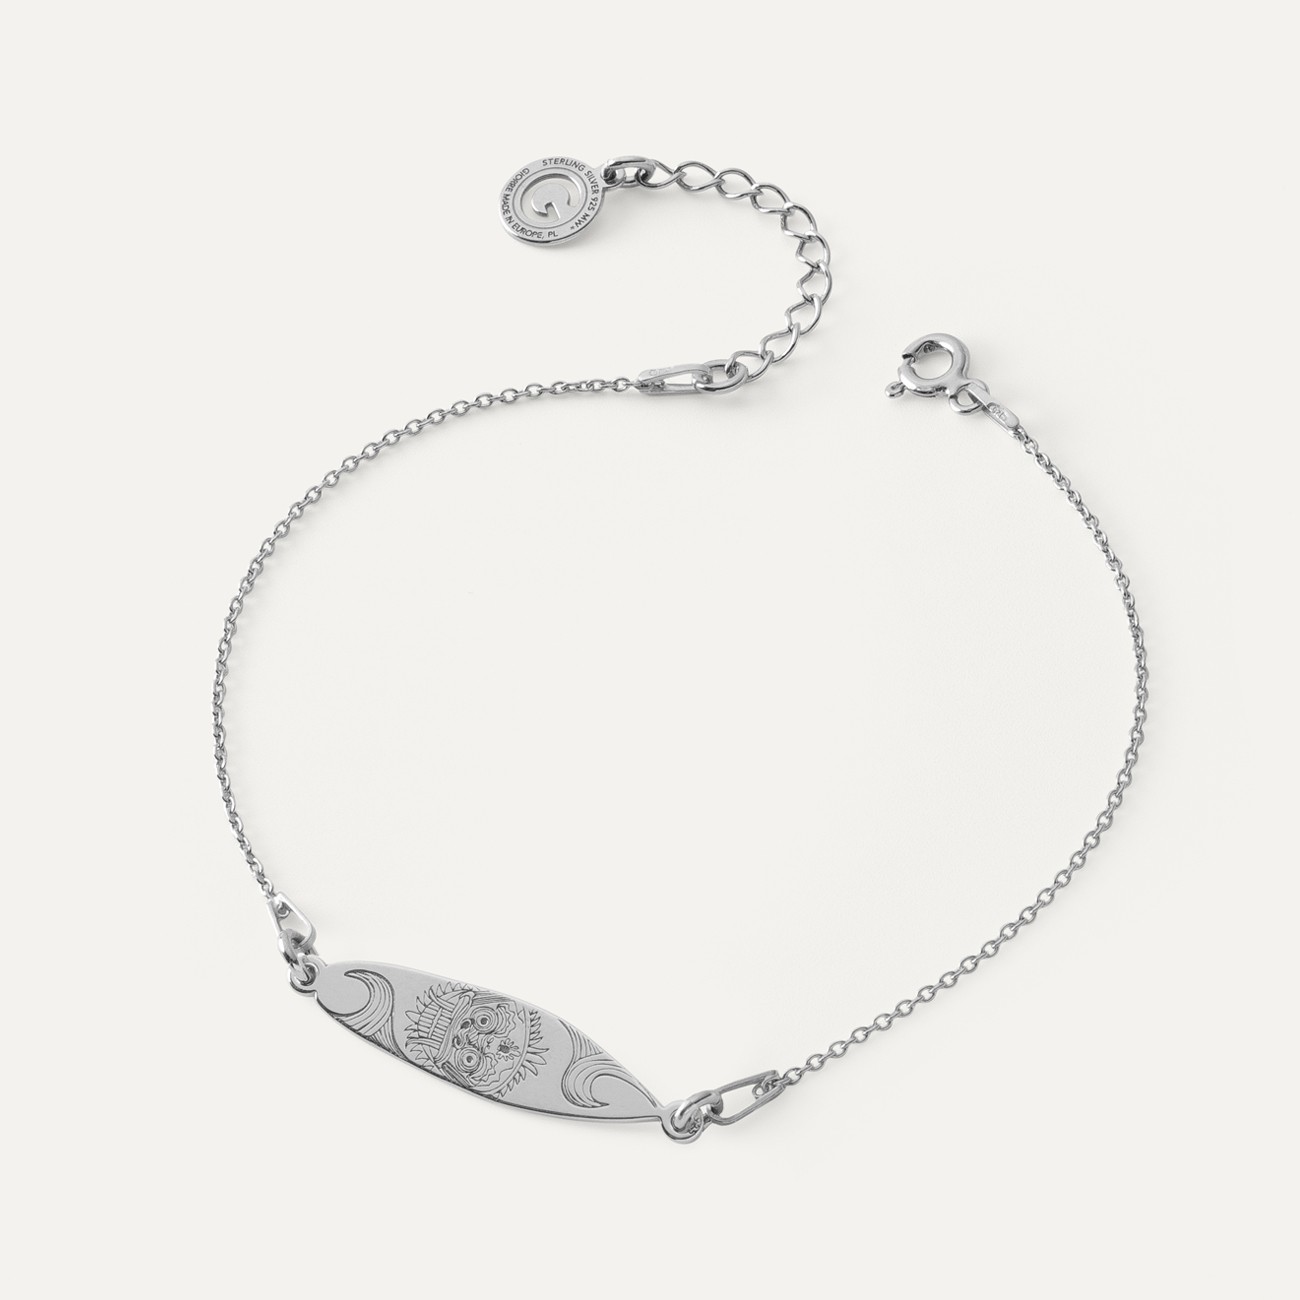 Giorre Woman's Bracelet 38265